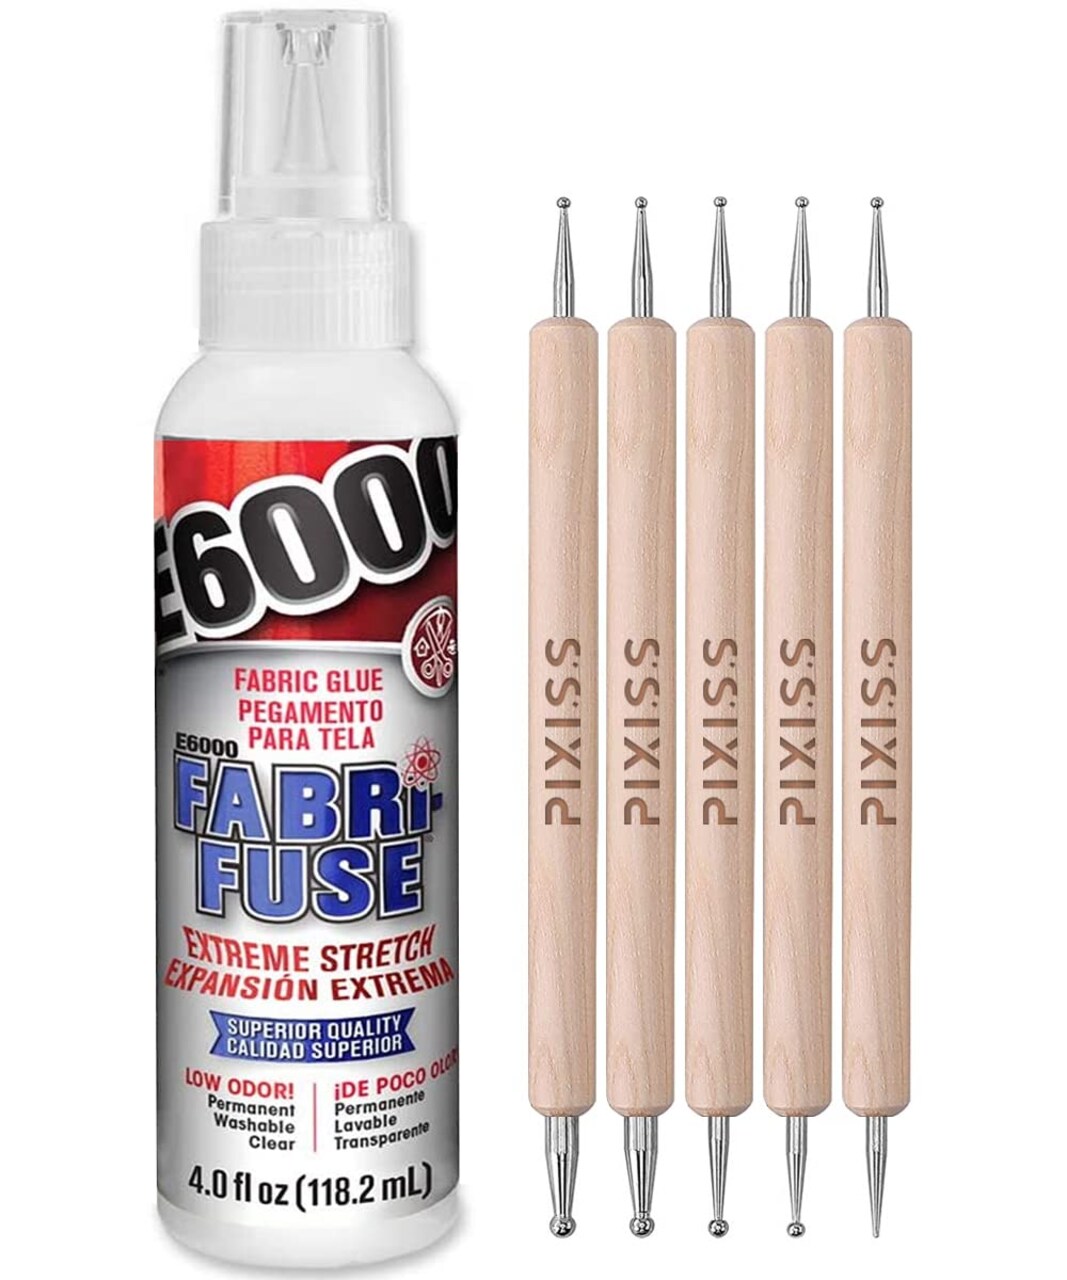 E6000 Fabri-Fuse Fabric Adhesive Glue 4oz, Pixiss Wooden Handle Stylus  Applicator Pens